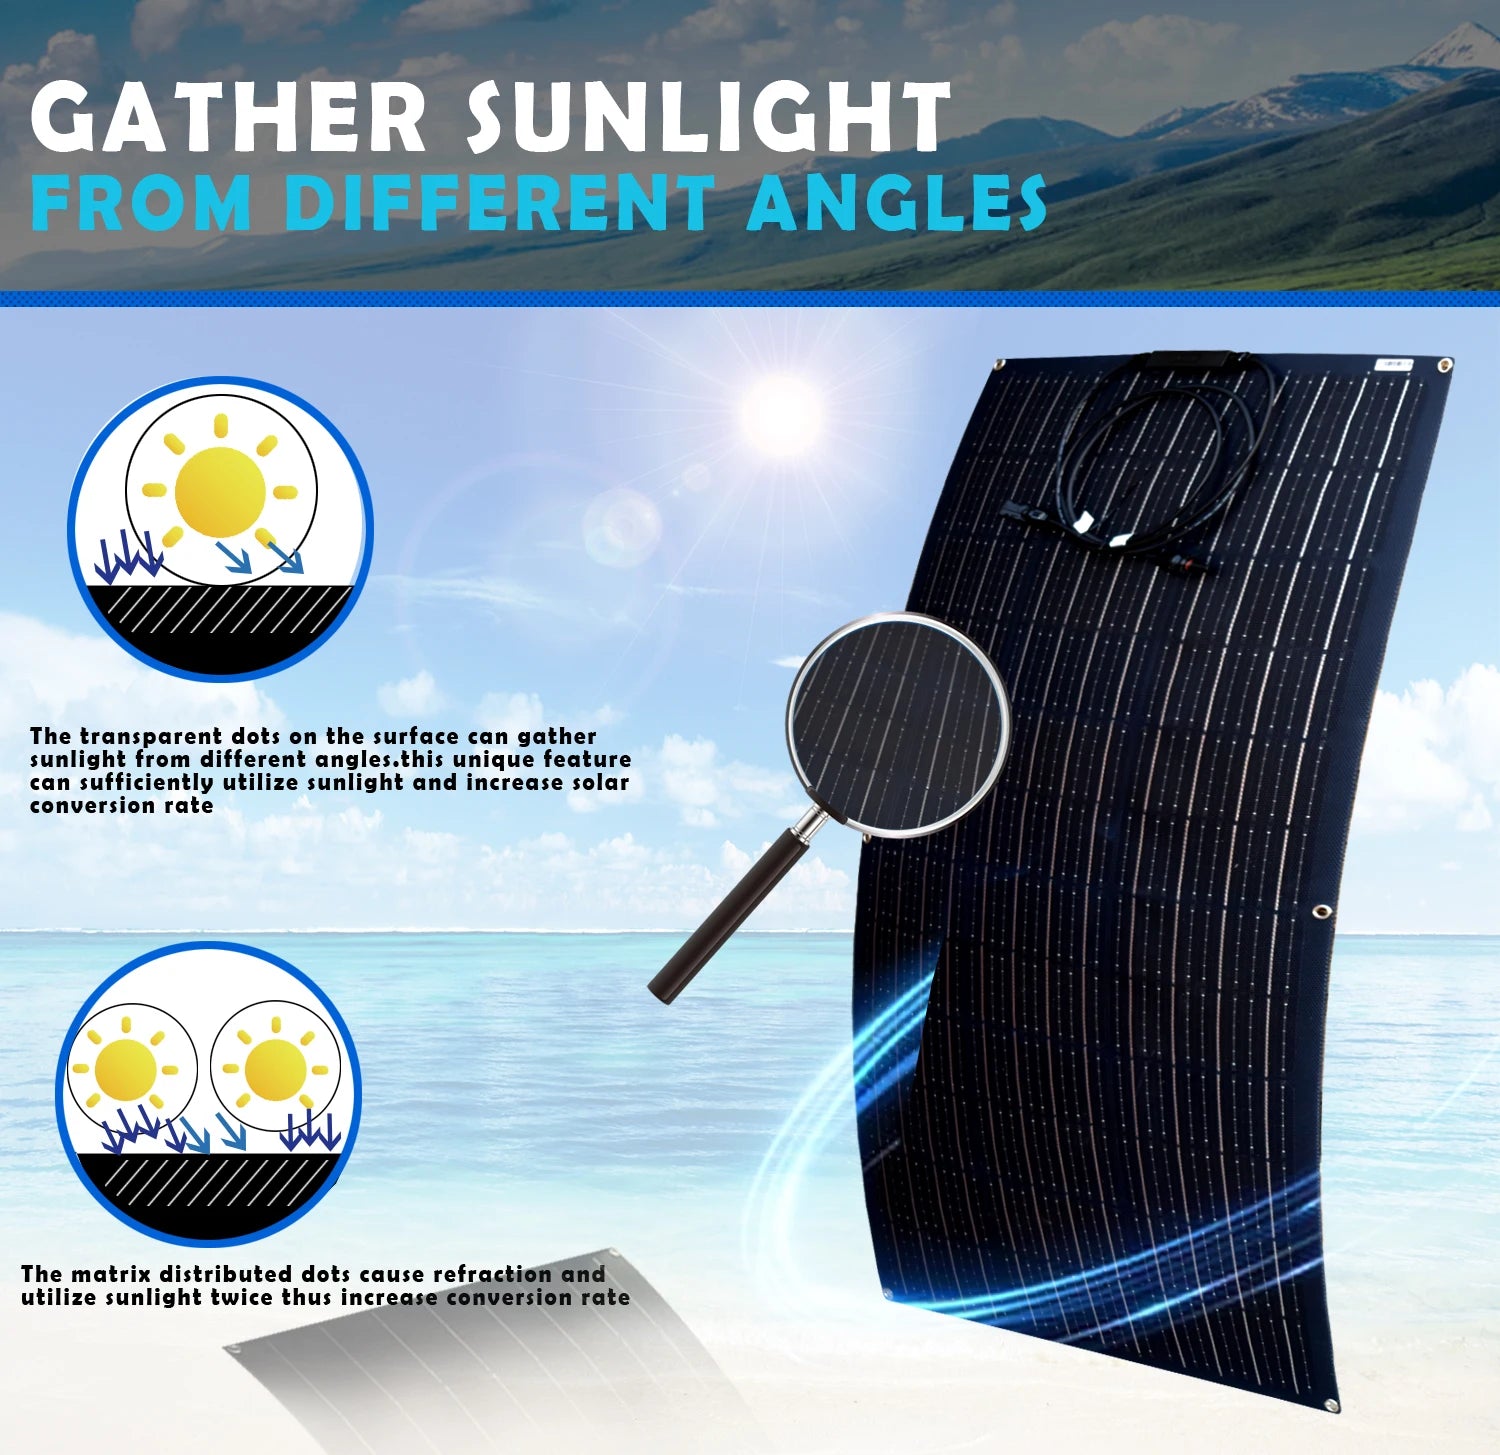 Jingyang Solar Panel, Optimal sunlight capture through unique transparency dots increases solar conversion efficiency.